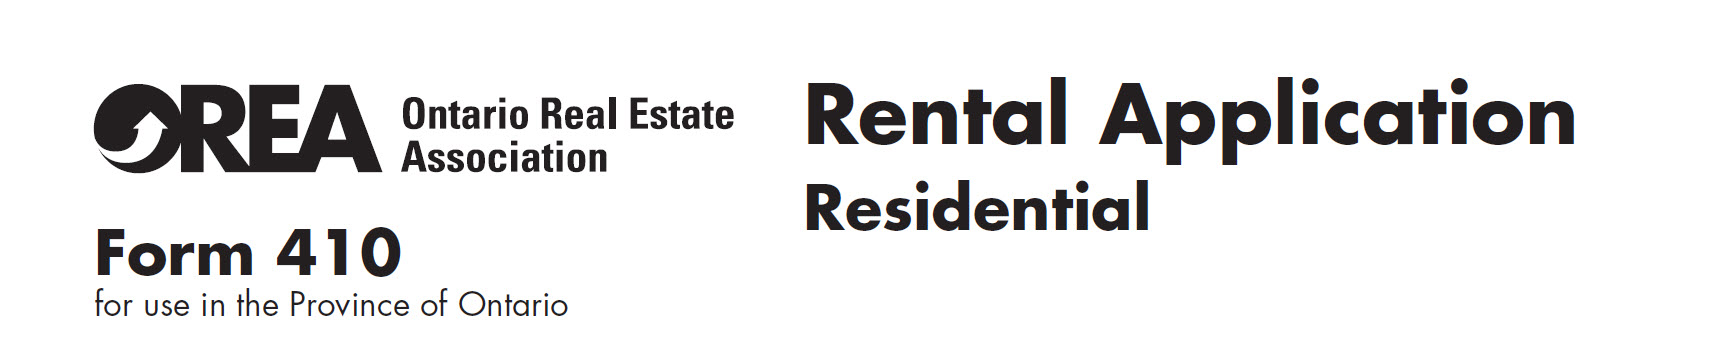 Ontario rental application